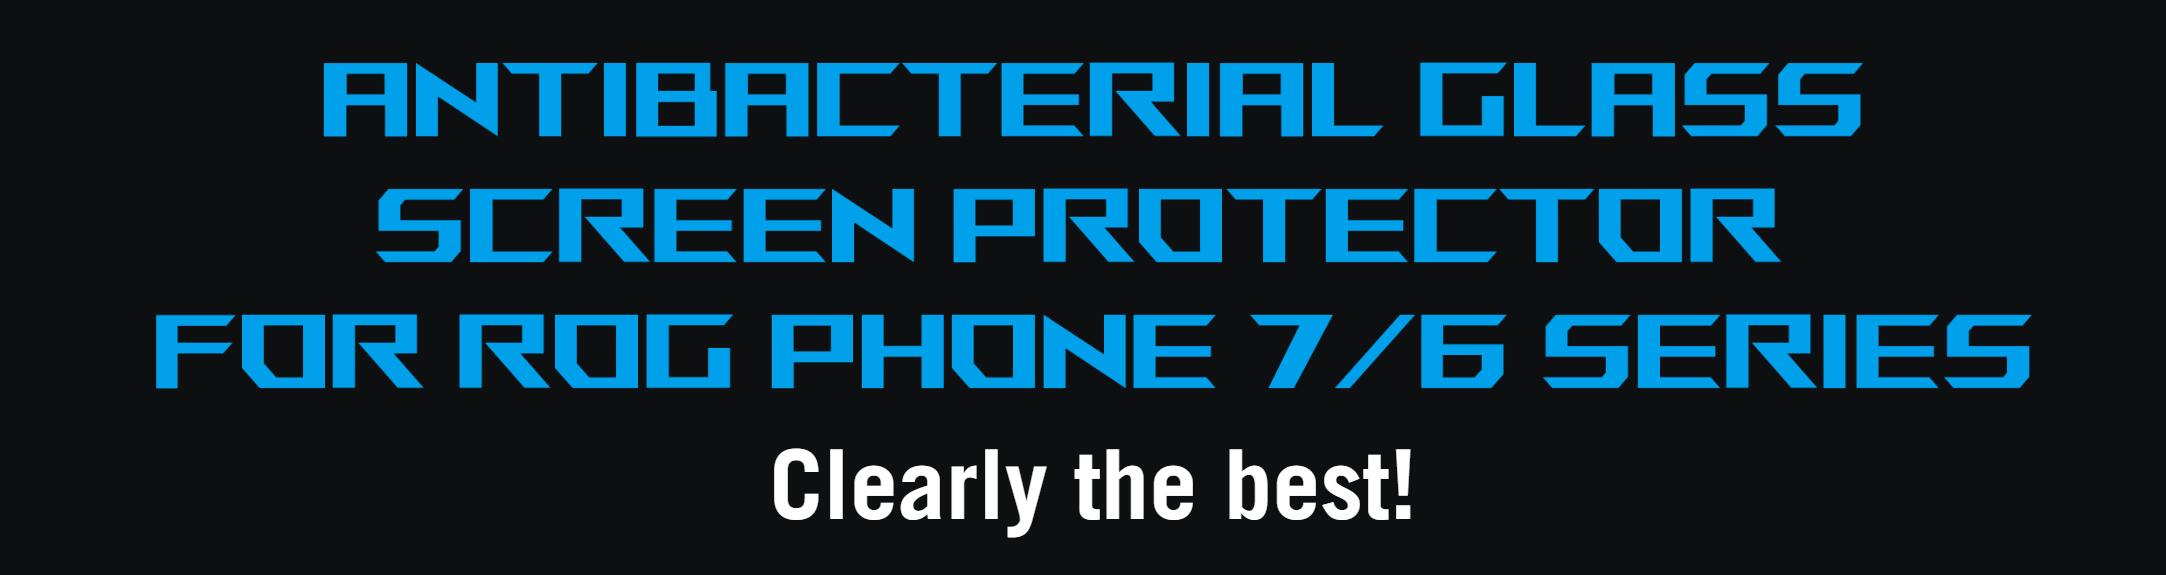 rog phone 7 glass screen protector